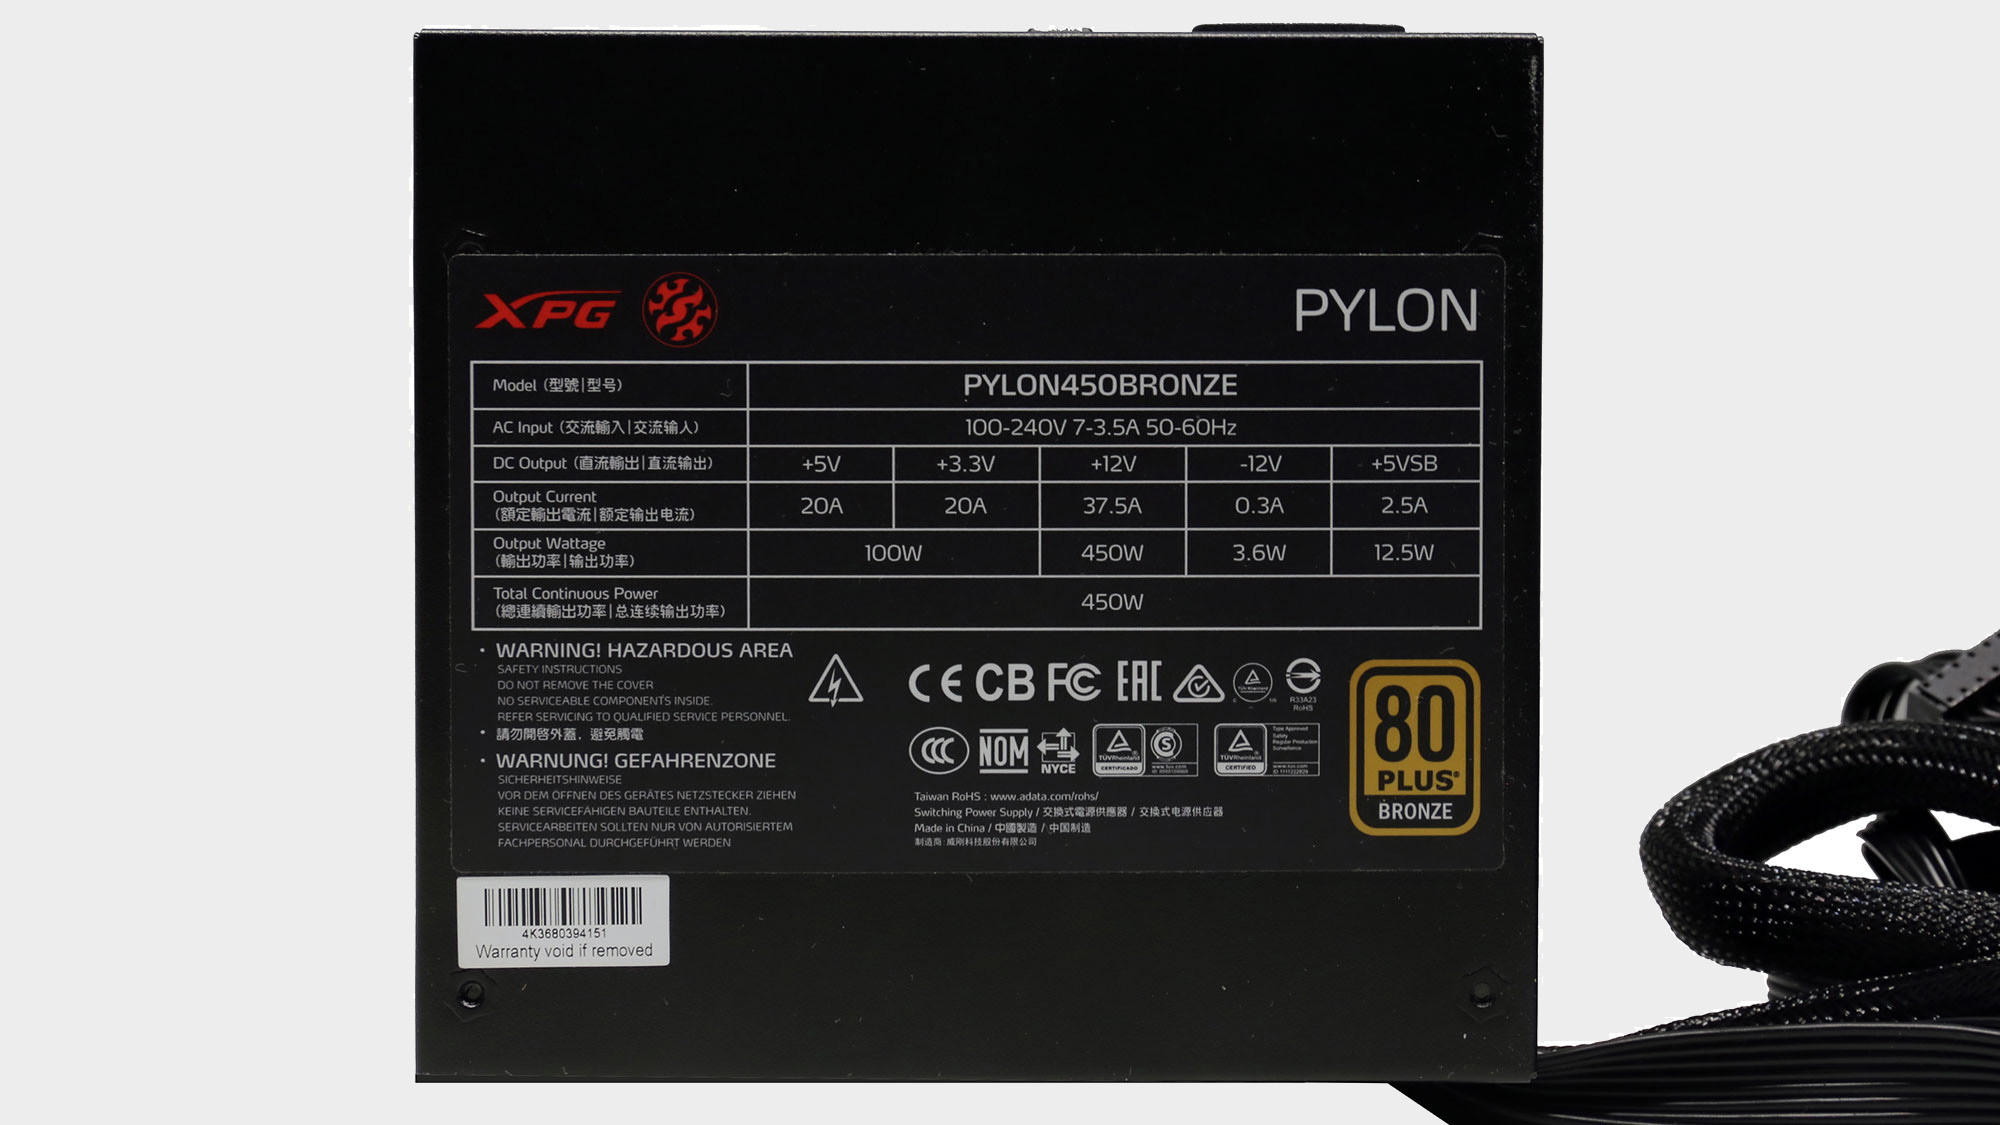 XPG Pylon 450W PSU from various angles.